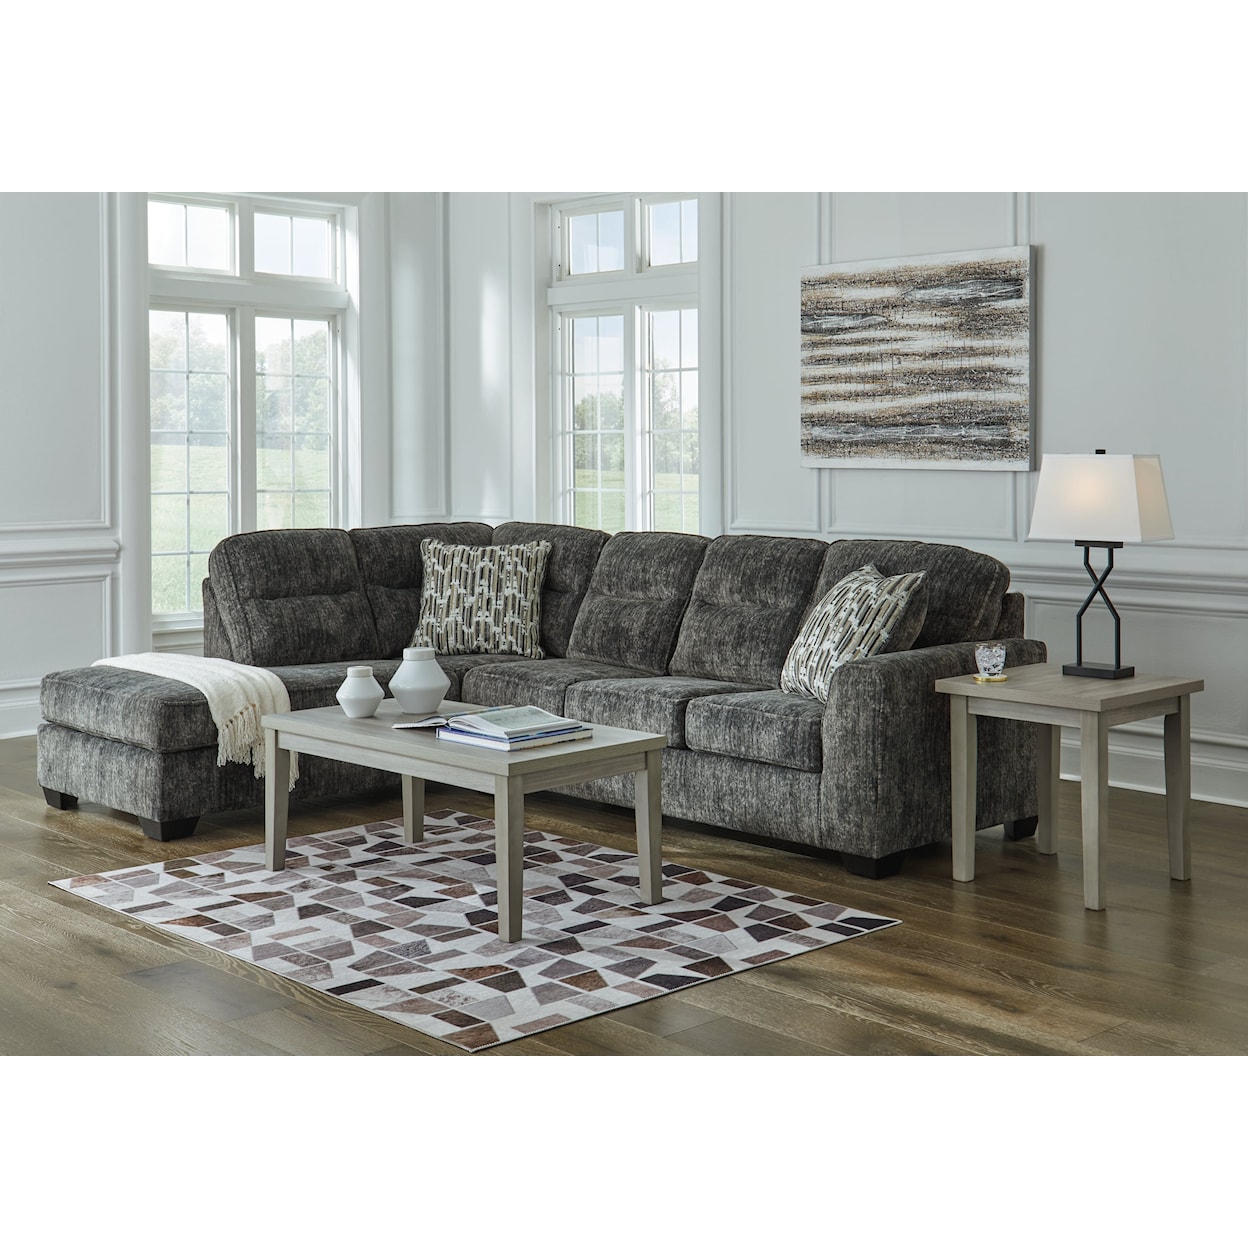 Signature Design by Ashley Furniture Lonoke Sectional Sofa